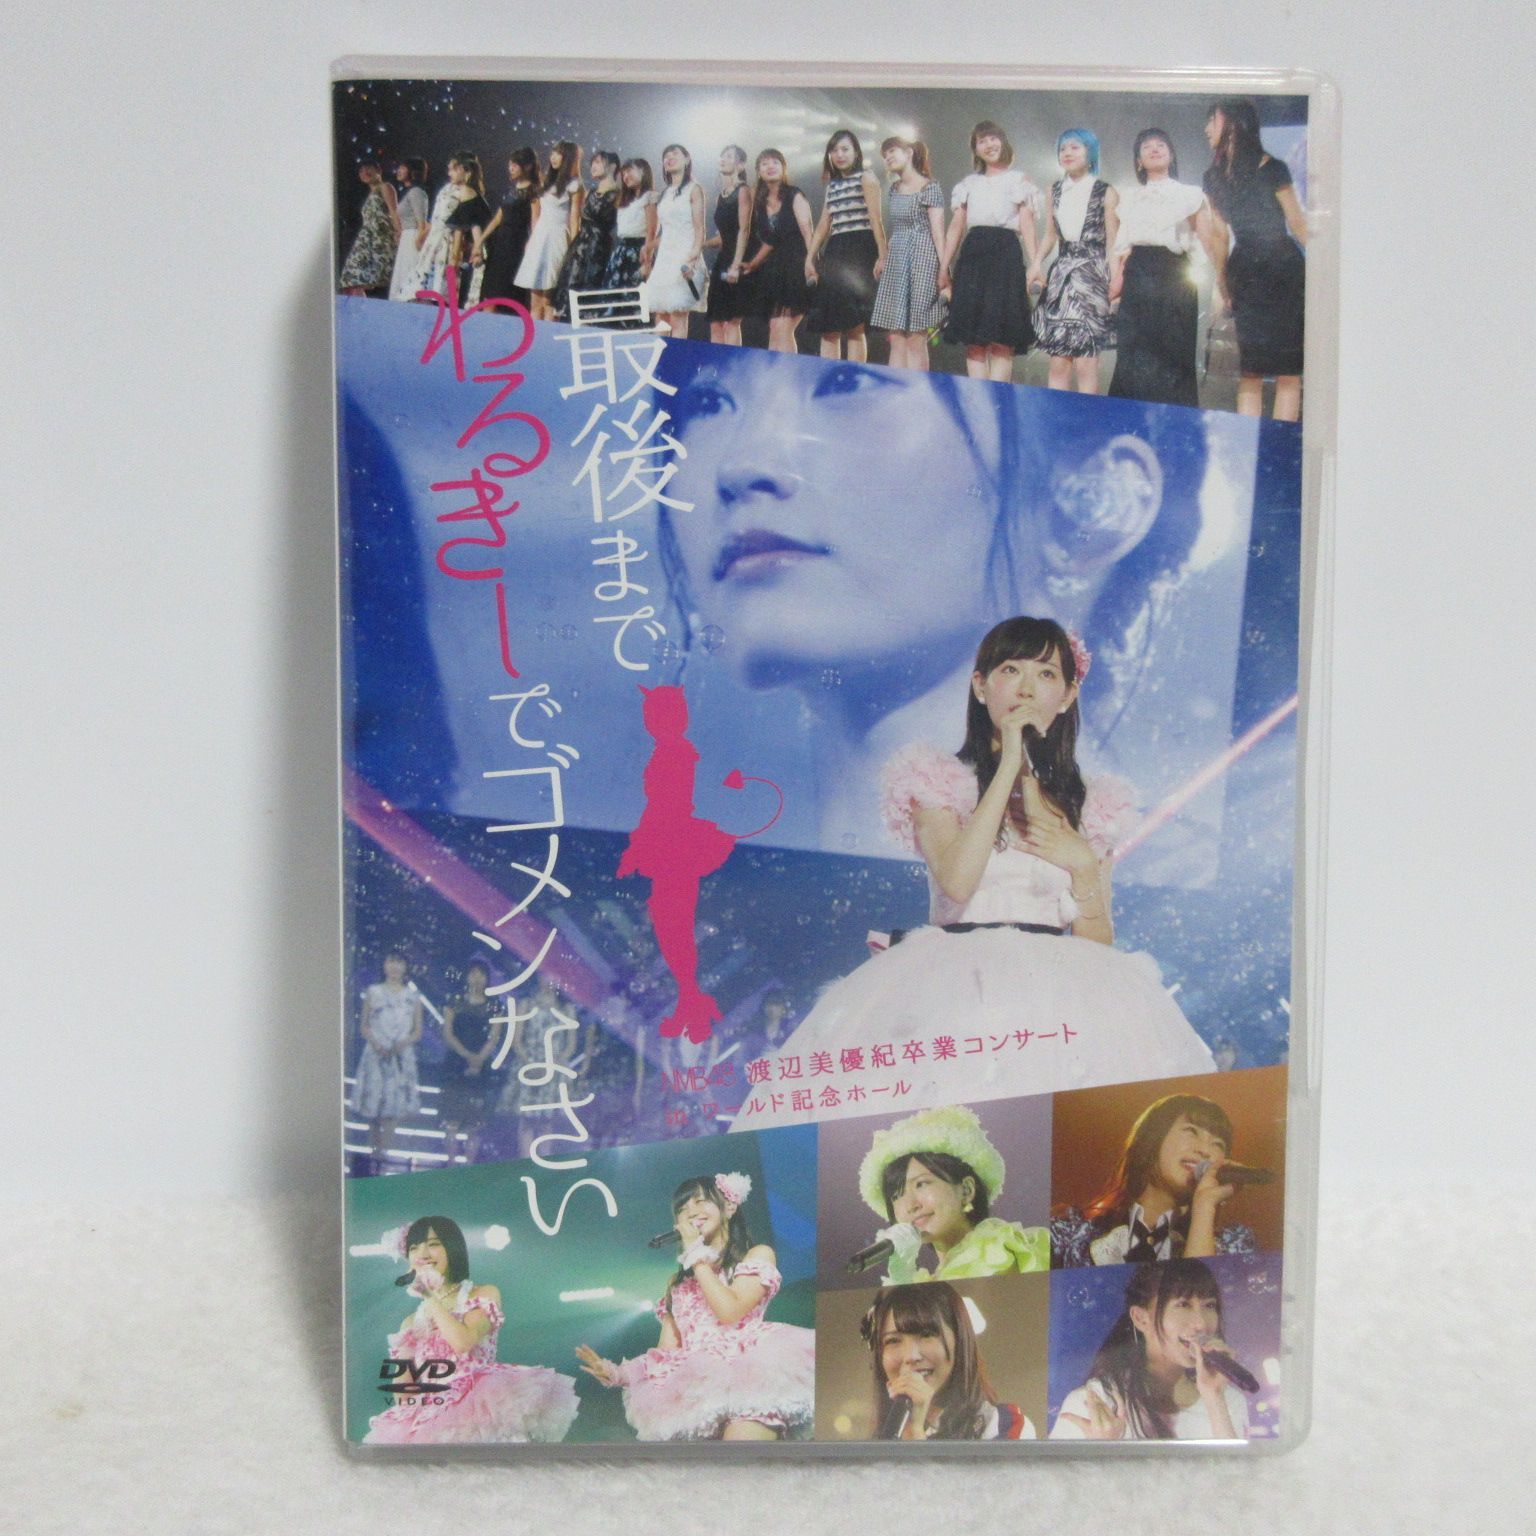 【DVD】NMB48 渡辺美優紀卒業コンサート in ワールド記念ホール ~最後までわるきーでゴメンなさい~